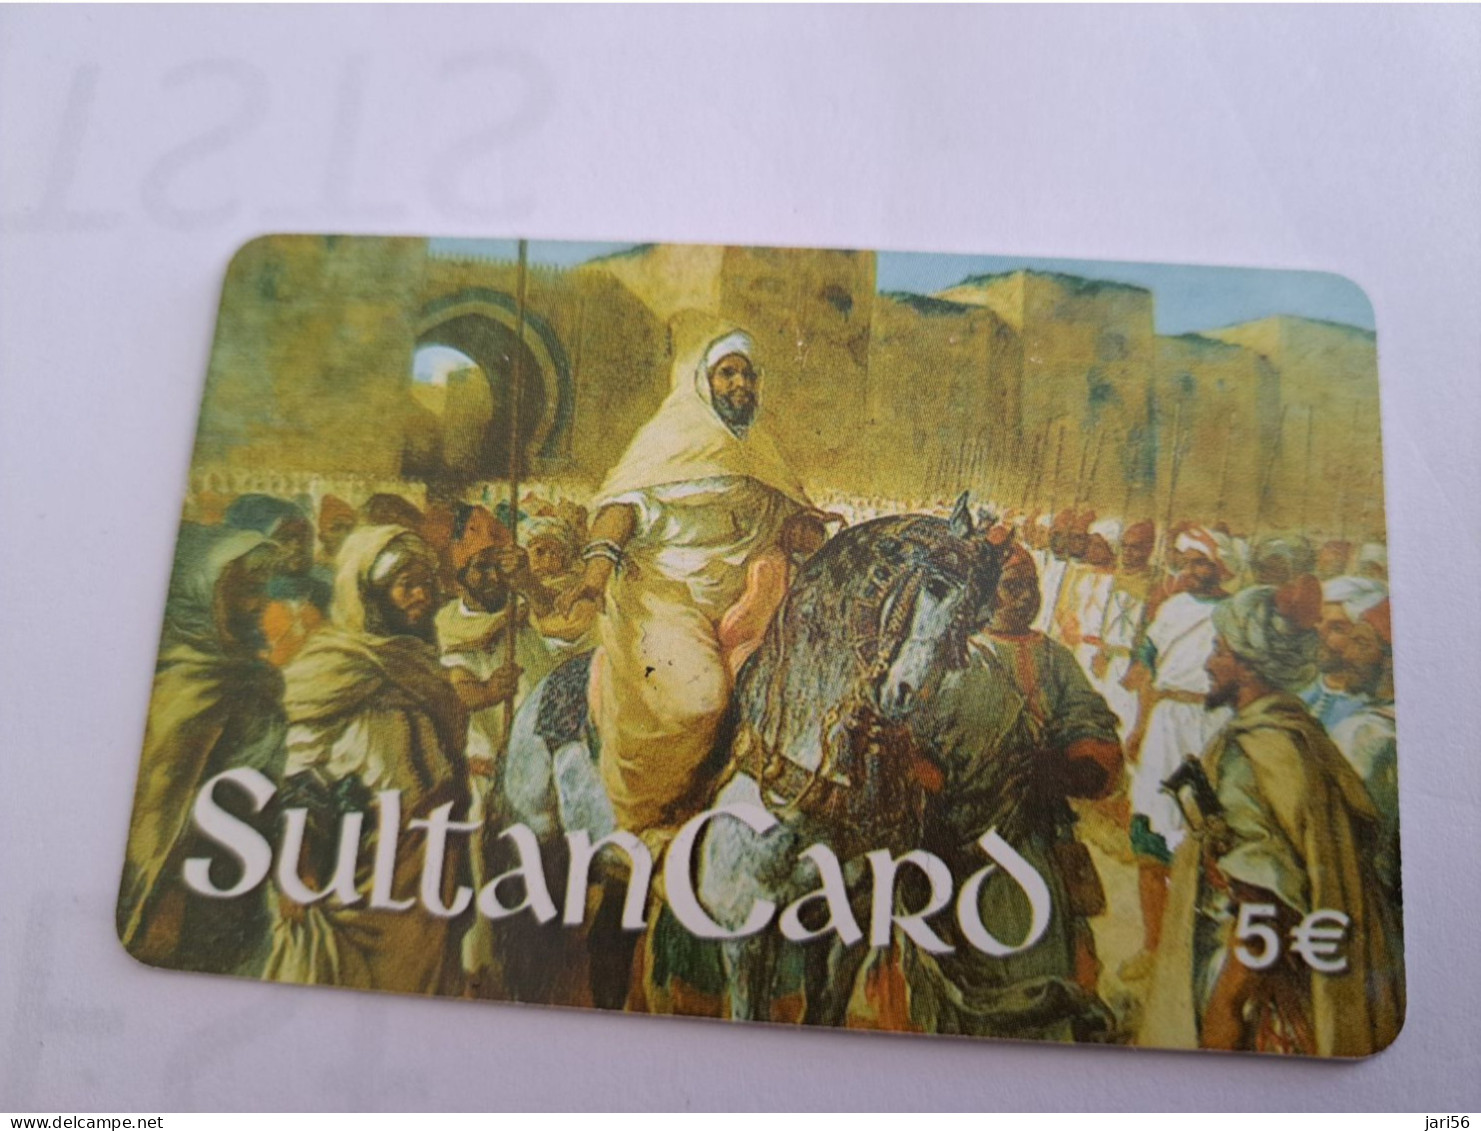 DUITSLAND/GERMANY  € 5,- / SULTANCARD/ MAN ON HORSE/ ARABIC    ON CARD        Fine Used  PREPAID  **16534** - [2] Móviles Tarjetas Prepagadas & Recargos